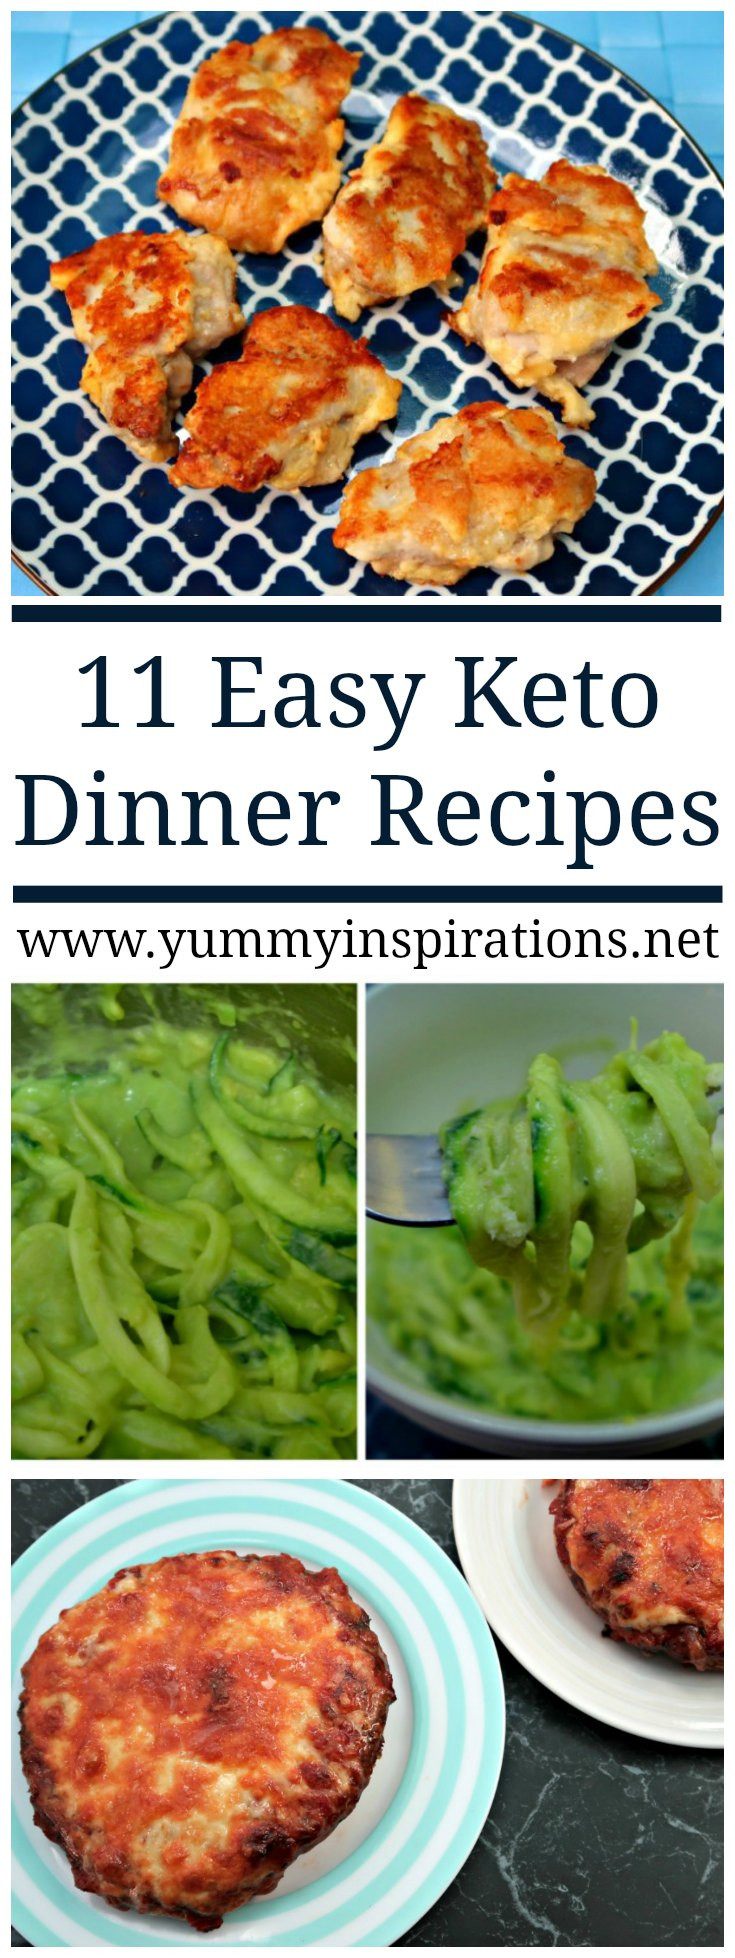 Fast Keto Dinner
 11 Easy Keto Dinner Recipes Quick Low Carb Ketogenic